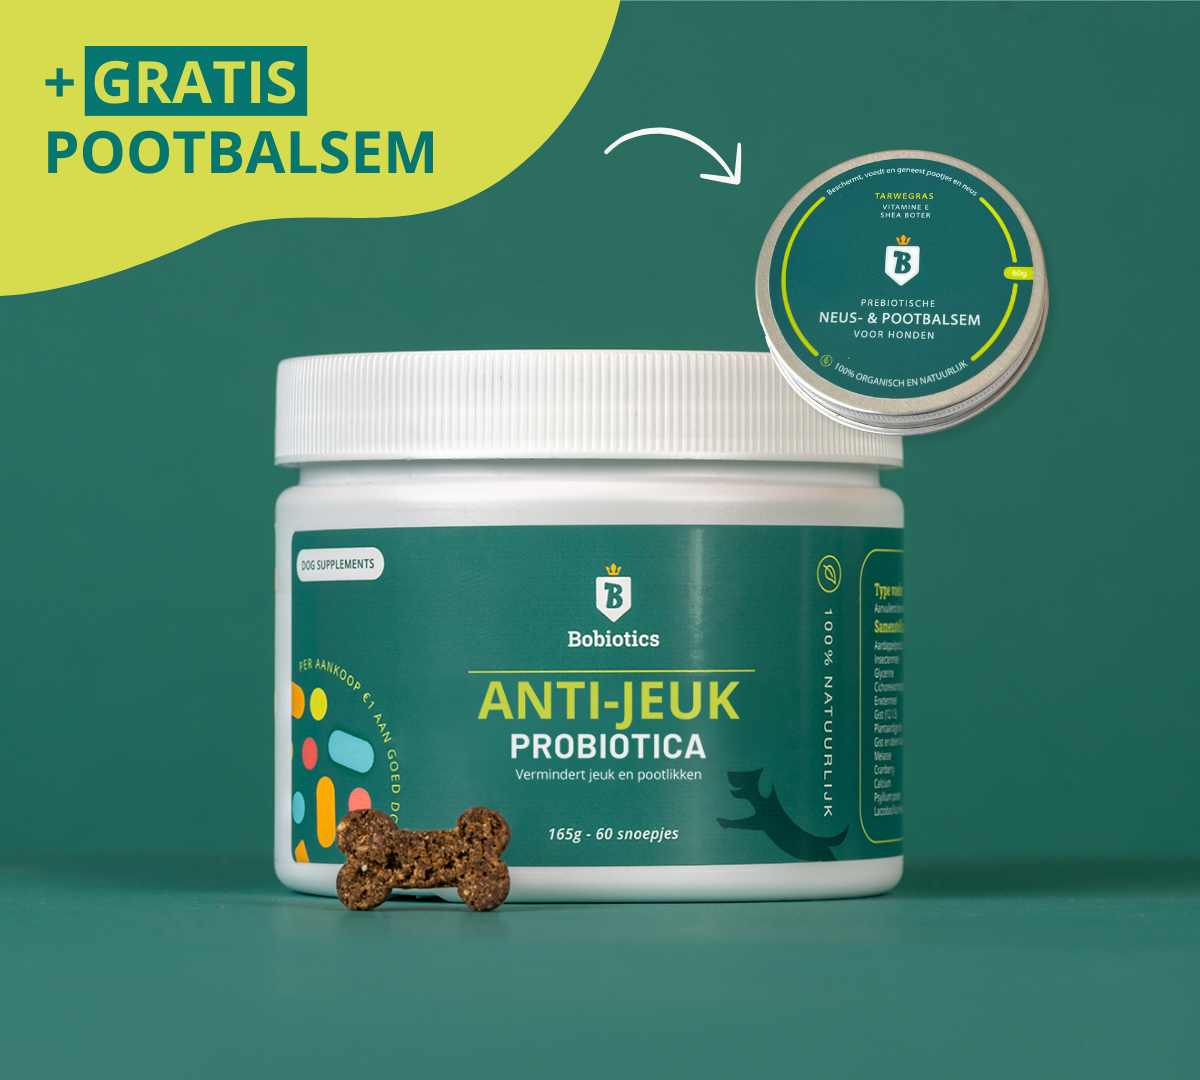 Probiotica Anti-Jeuk & Pootlikken - 60 Snoepjes